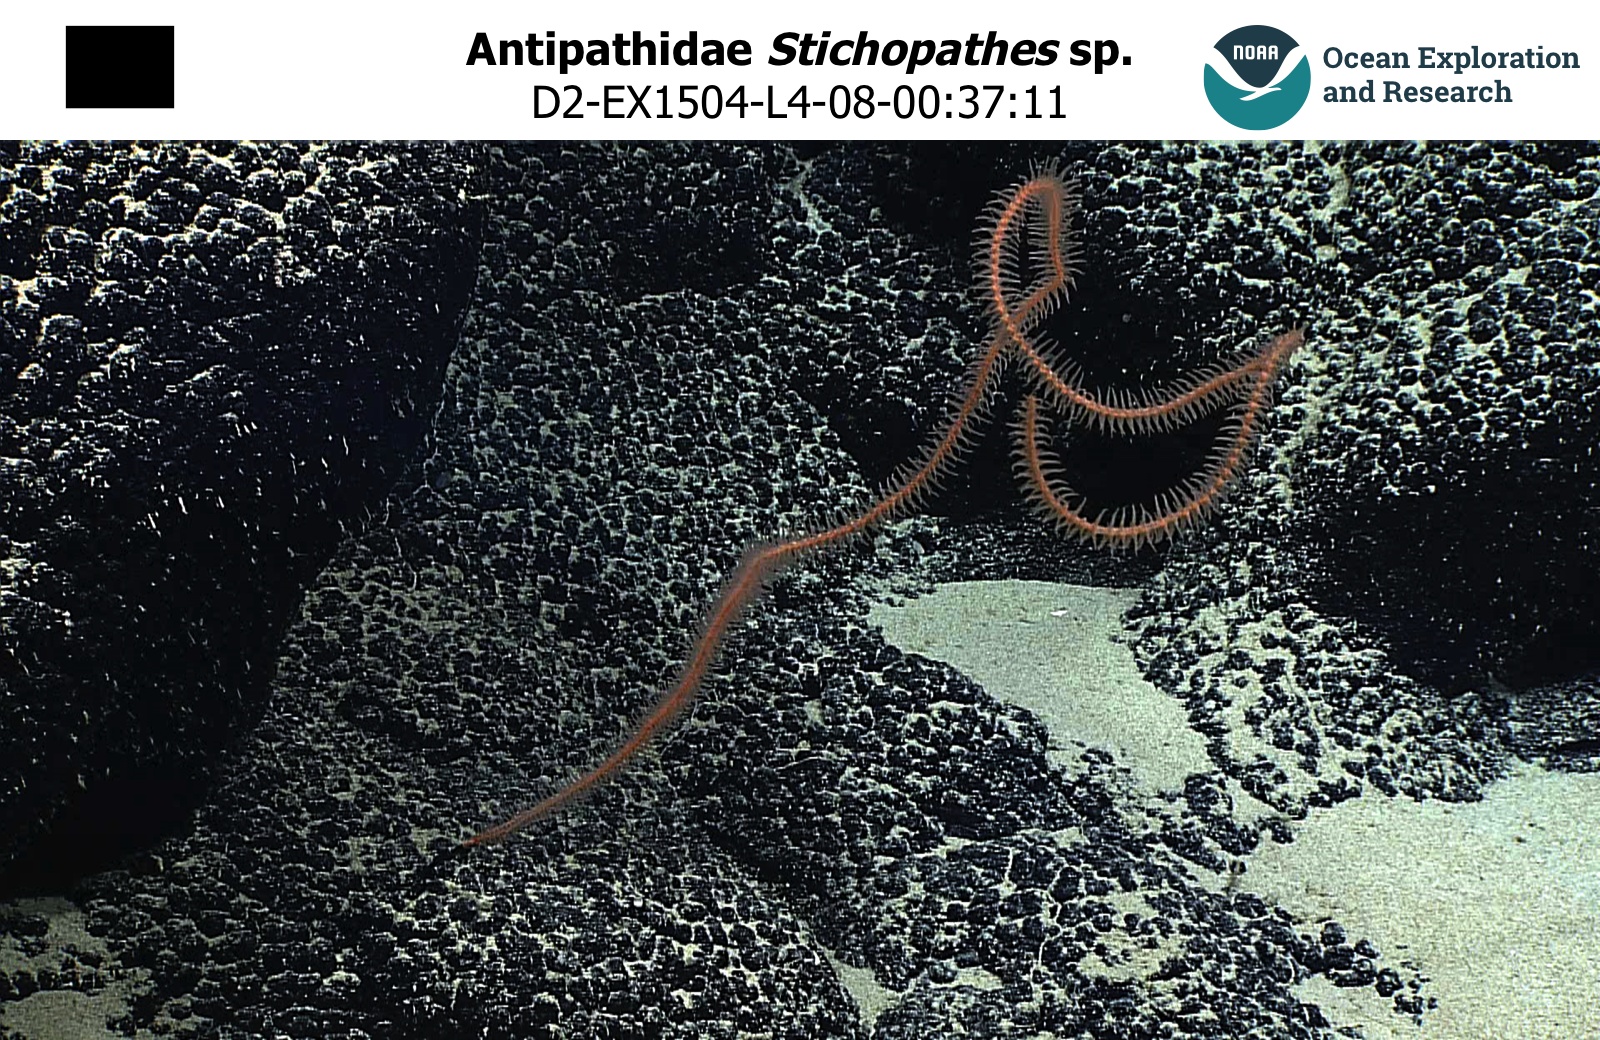 Antipathidae Stichopathes sp.